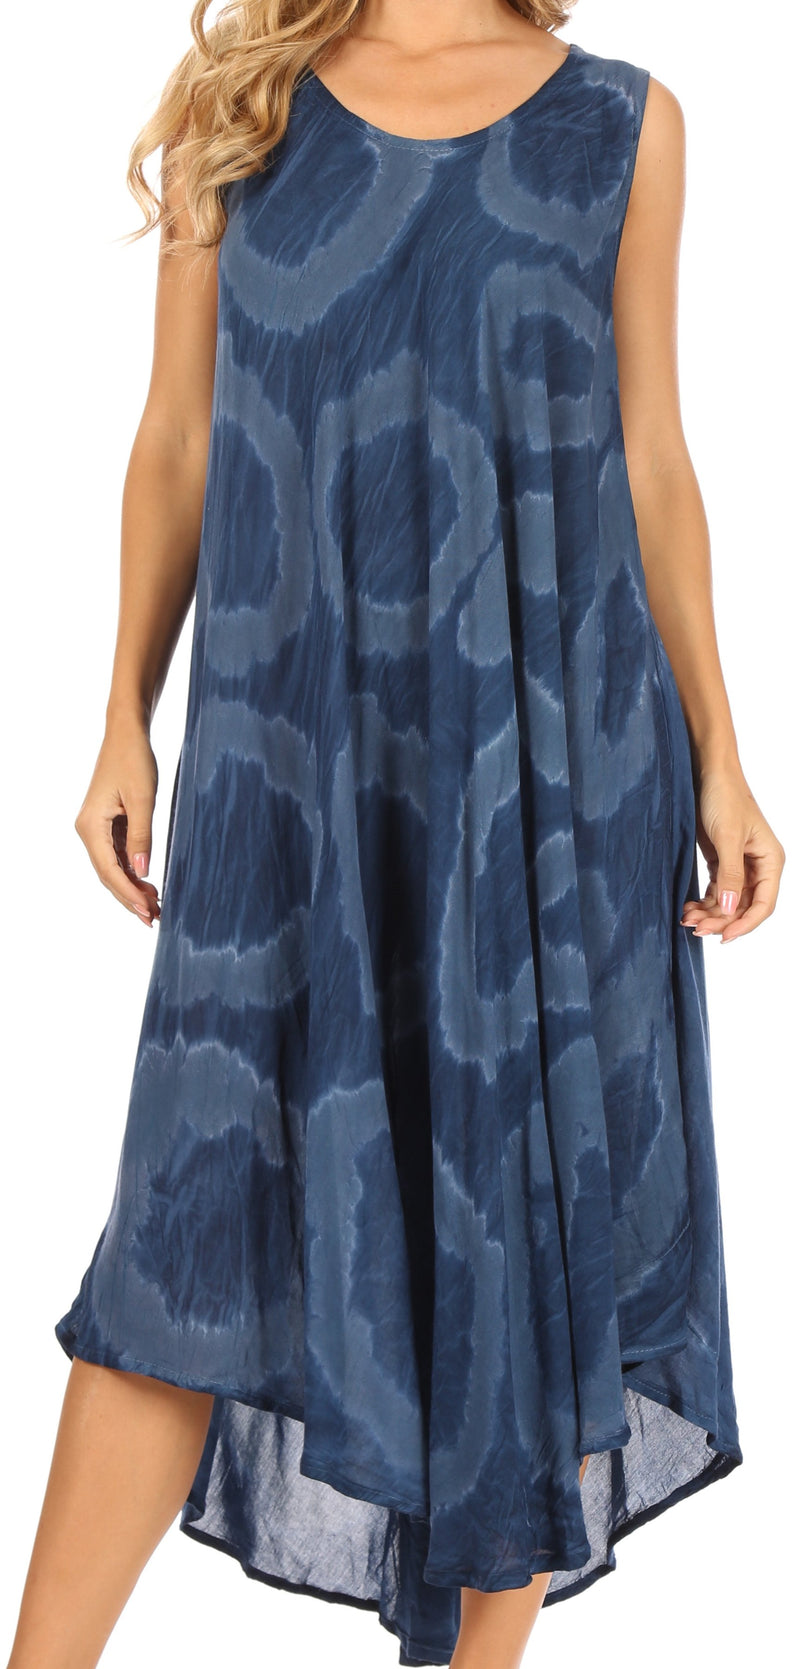 Sakkas Rocio Women's Sleeveless Caftan Beach Cover up Dress Casual Relaxed Tie dye